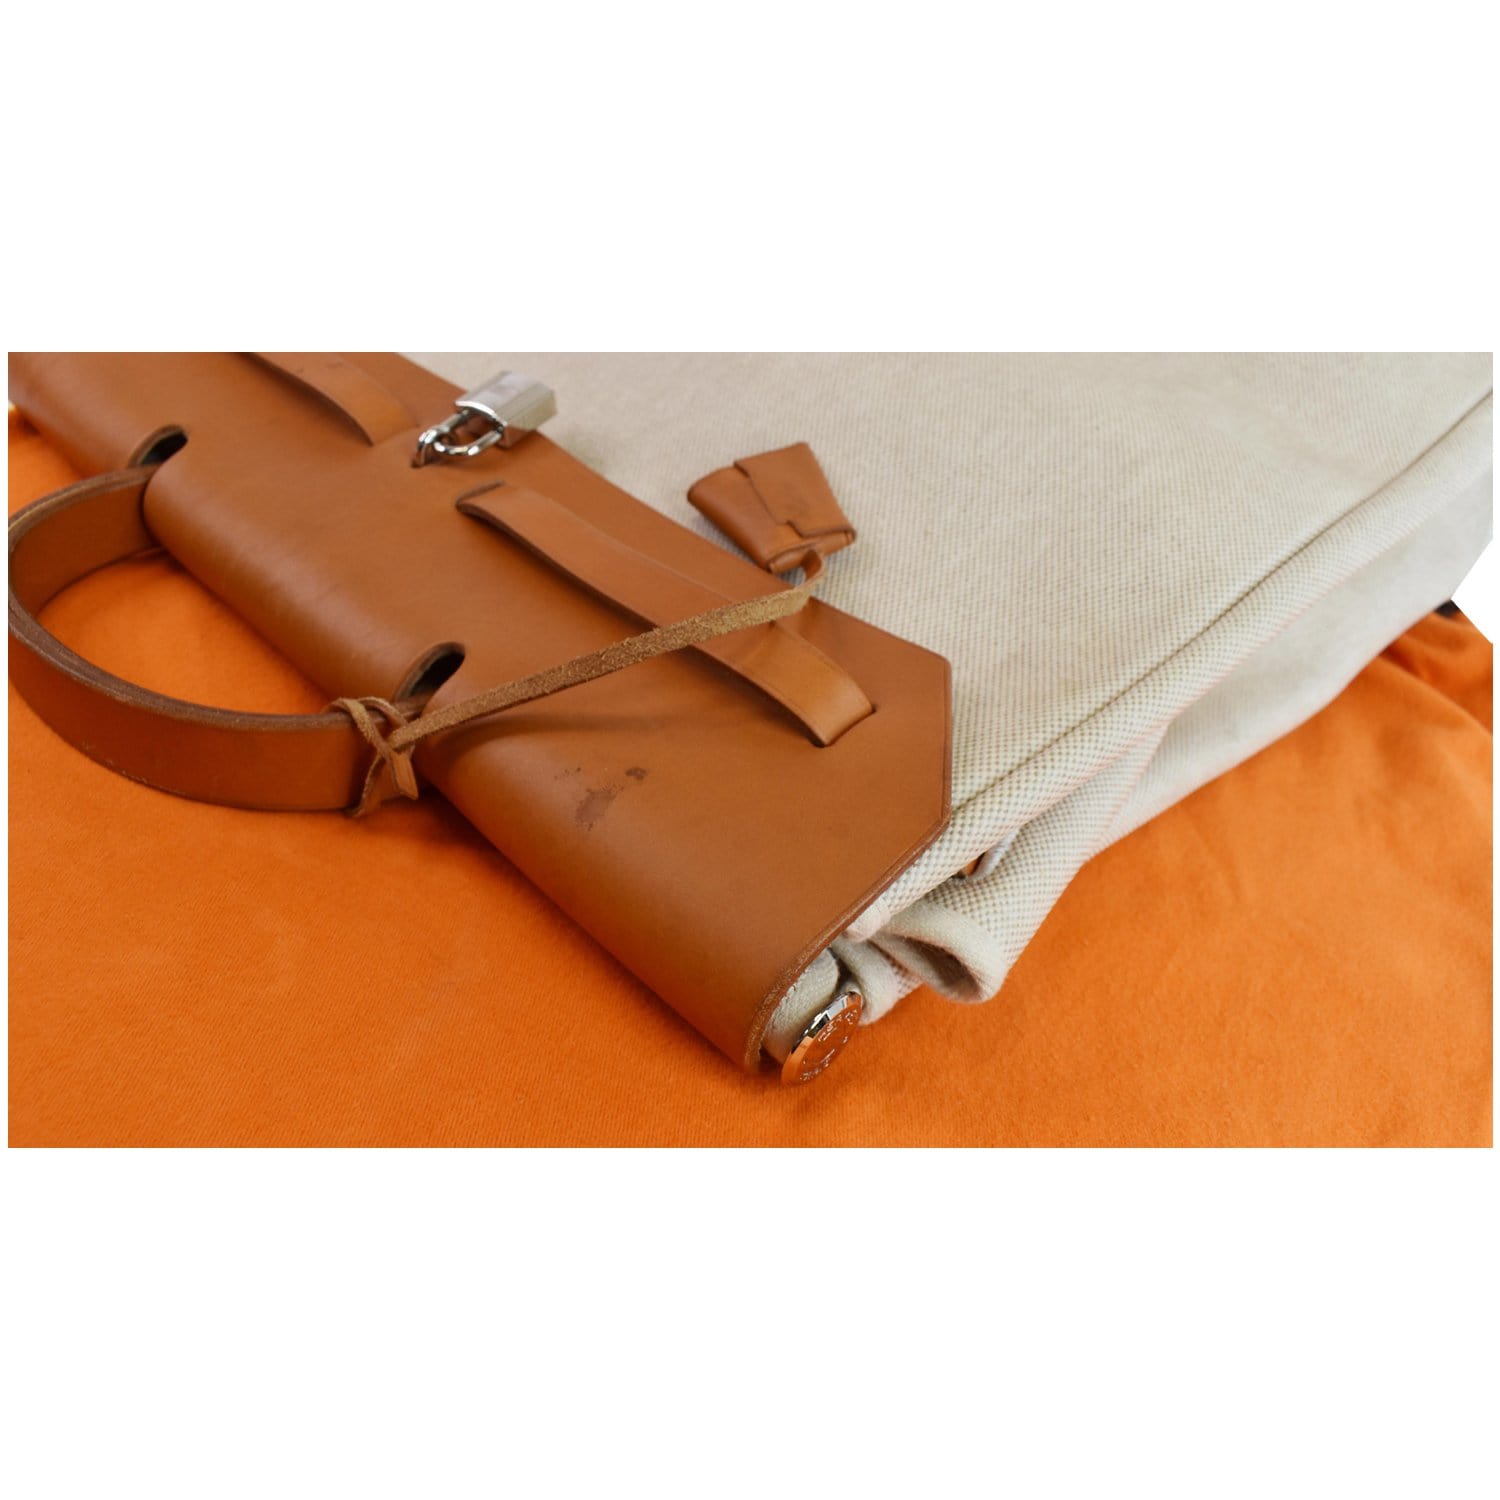 Hermes Herbag leather backpack - ShopStyle